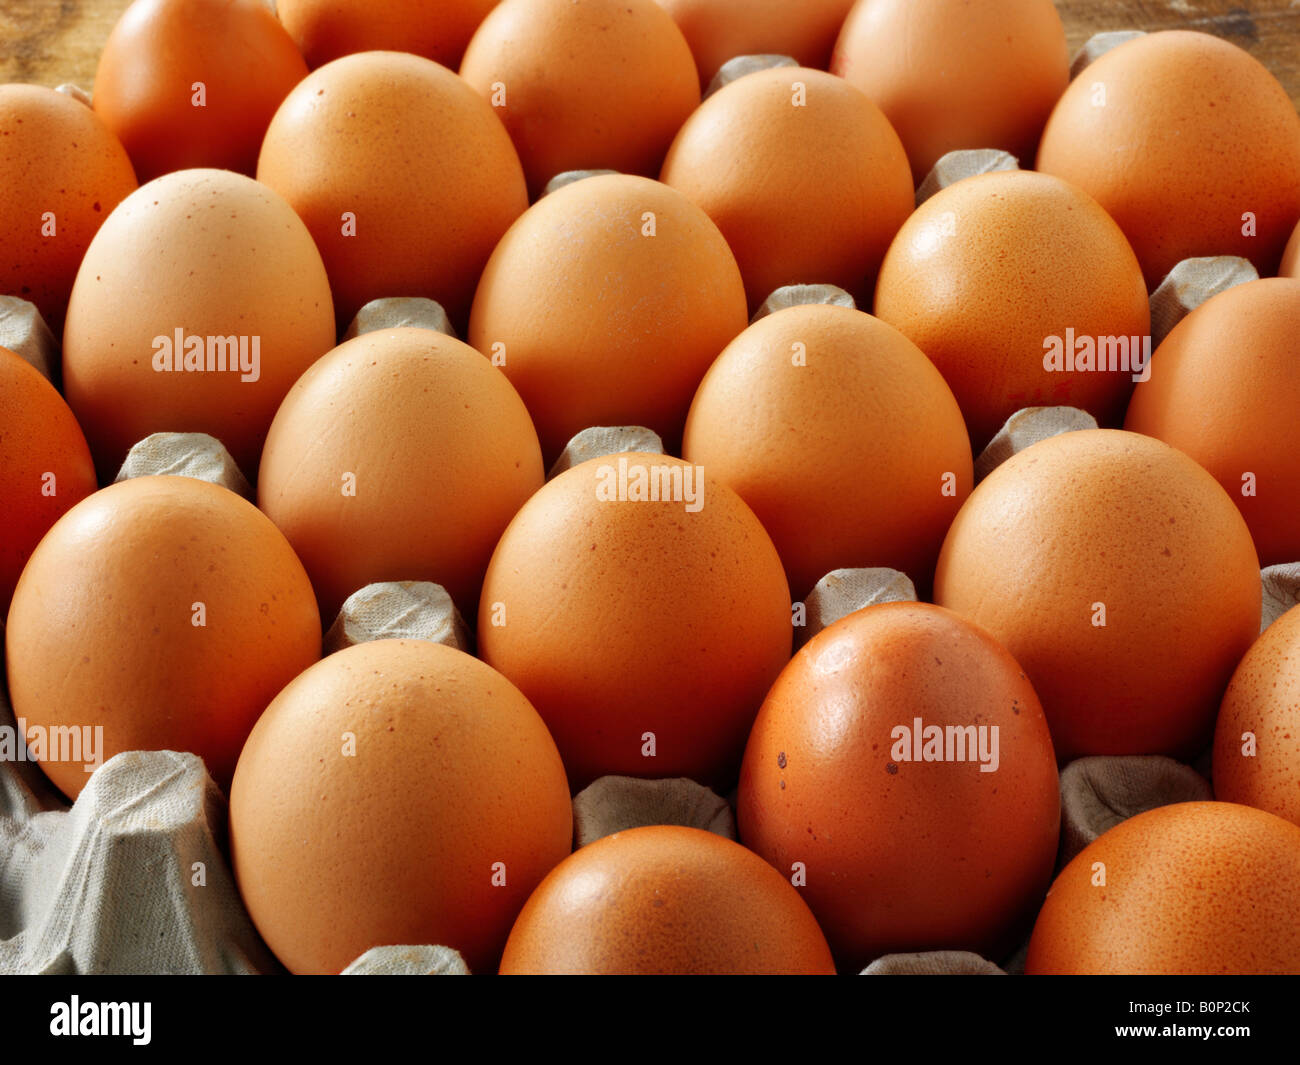 A tray of organic free range fresh brown chicken eggs Stock Photo